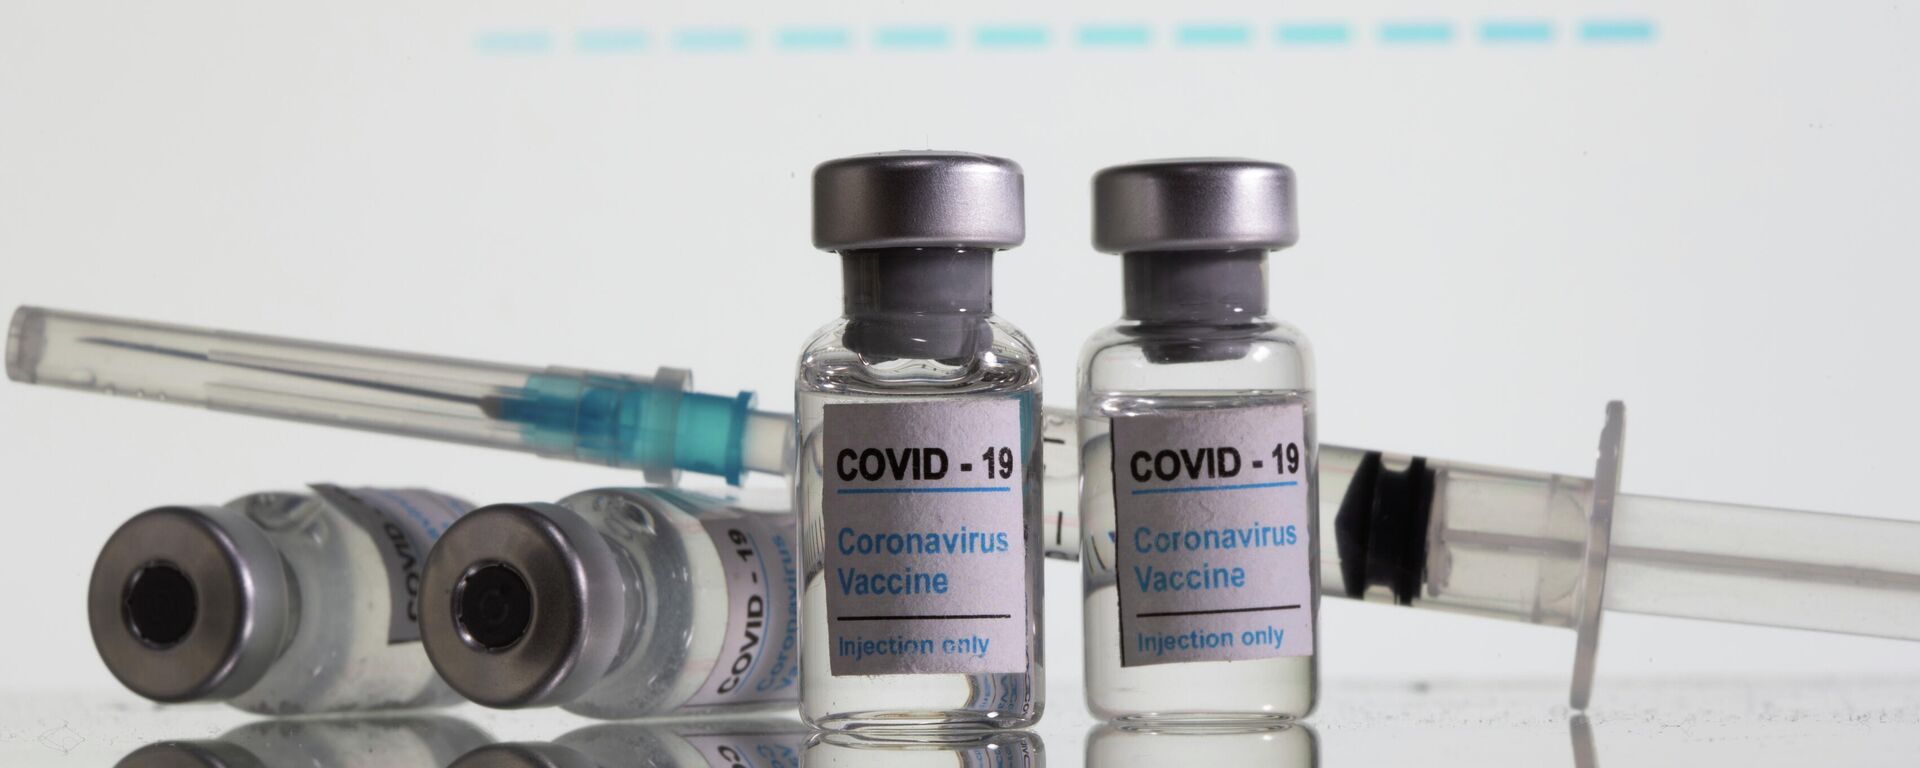 Viales de vacuna de Moderna contra el COVID-19 - Sputnik Mundo, 1920, 18.05.2021